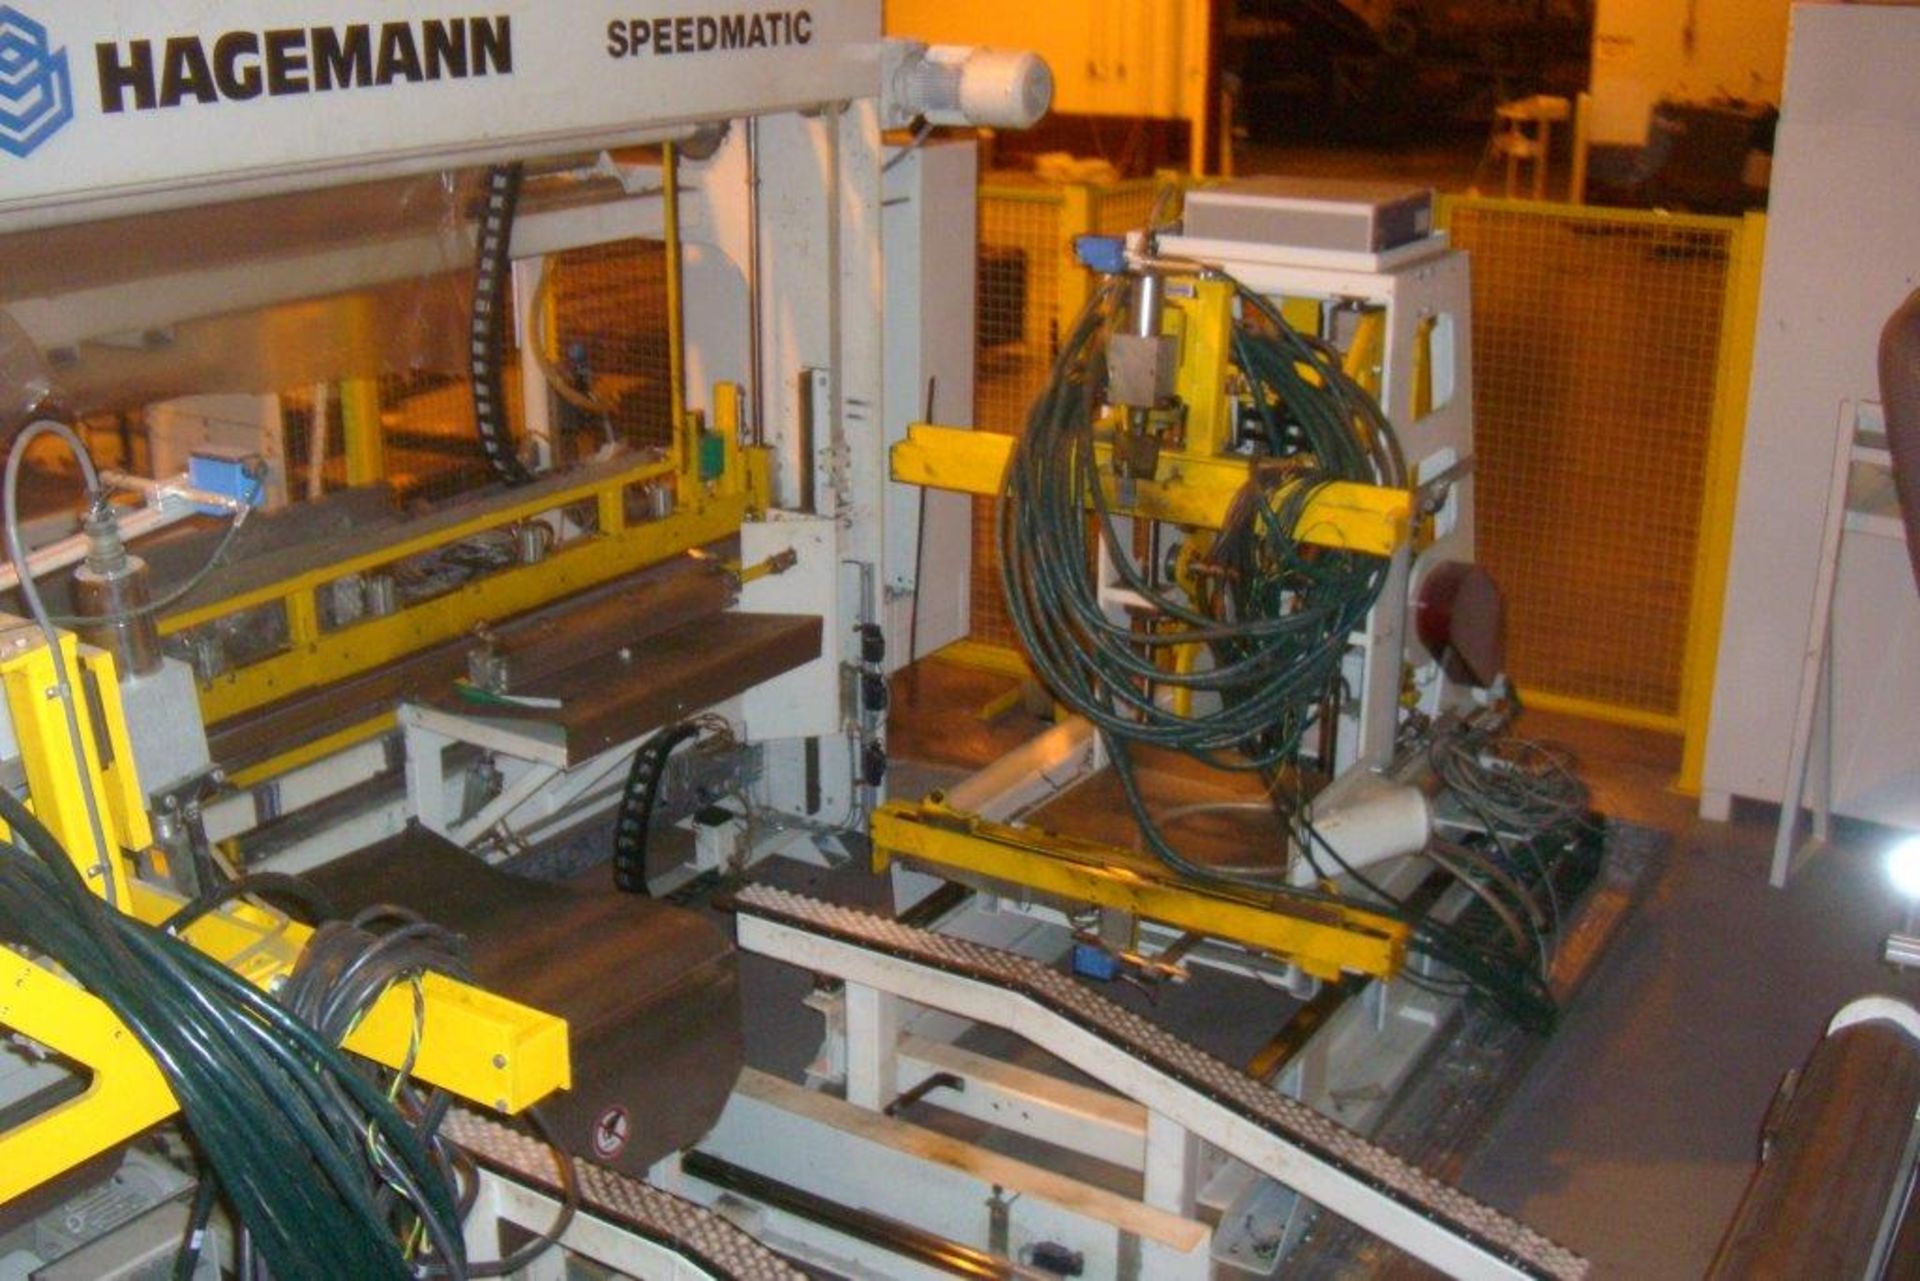 Hagemann Speedmatic Roll Wrapper Machine, Type, KOM #00331750.01, Year 200, Max Film Width 135 inch - Image 12 of 24